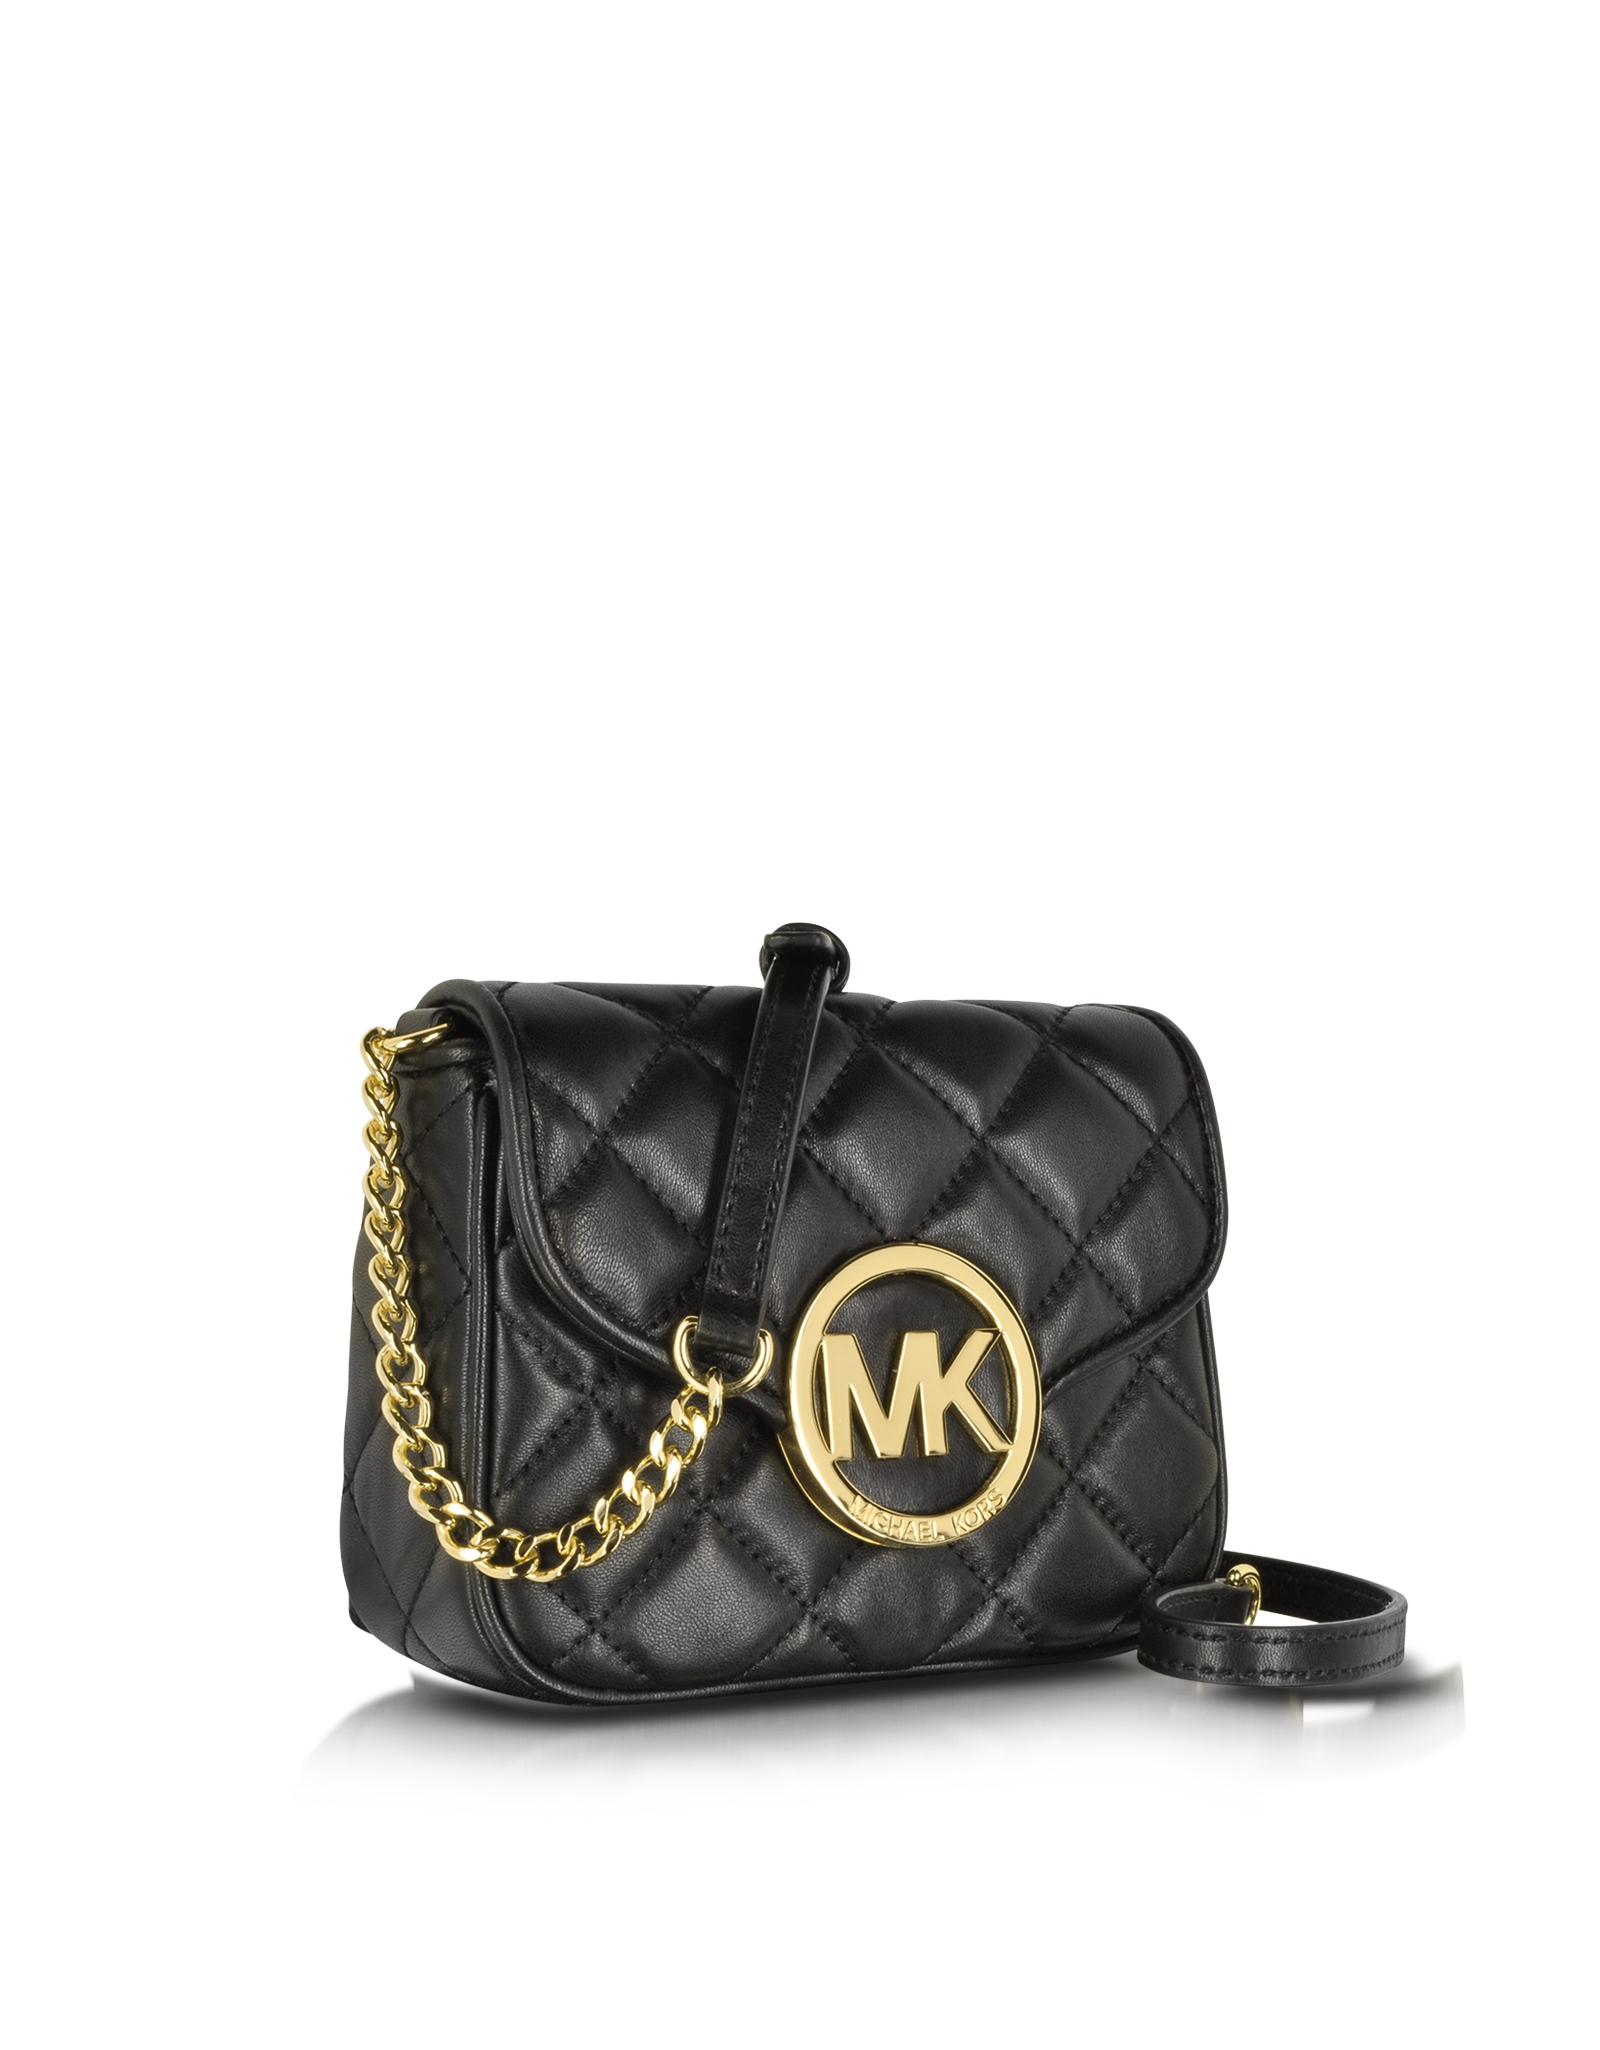 Michael Kors USA: Designer Handbags, Clothing, Menswear, Watches, Shoes,  And More | Michael Kors